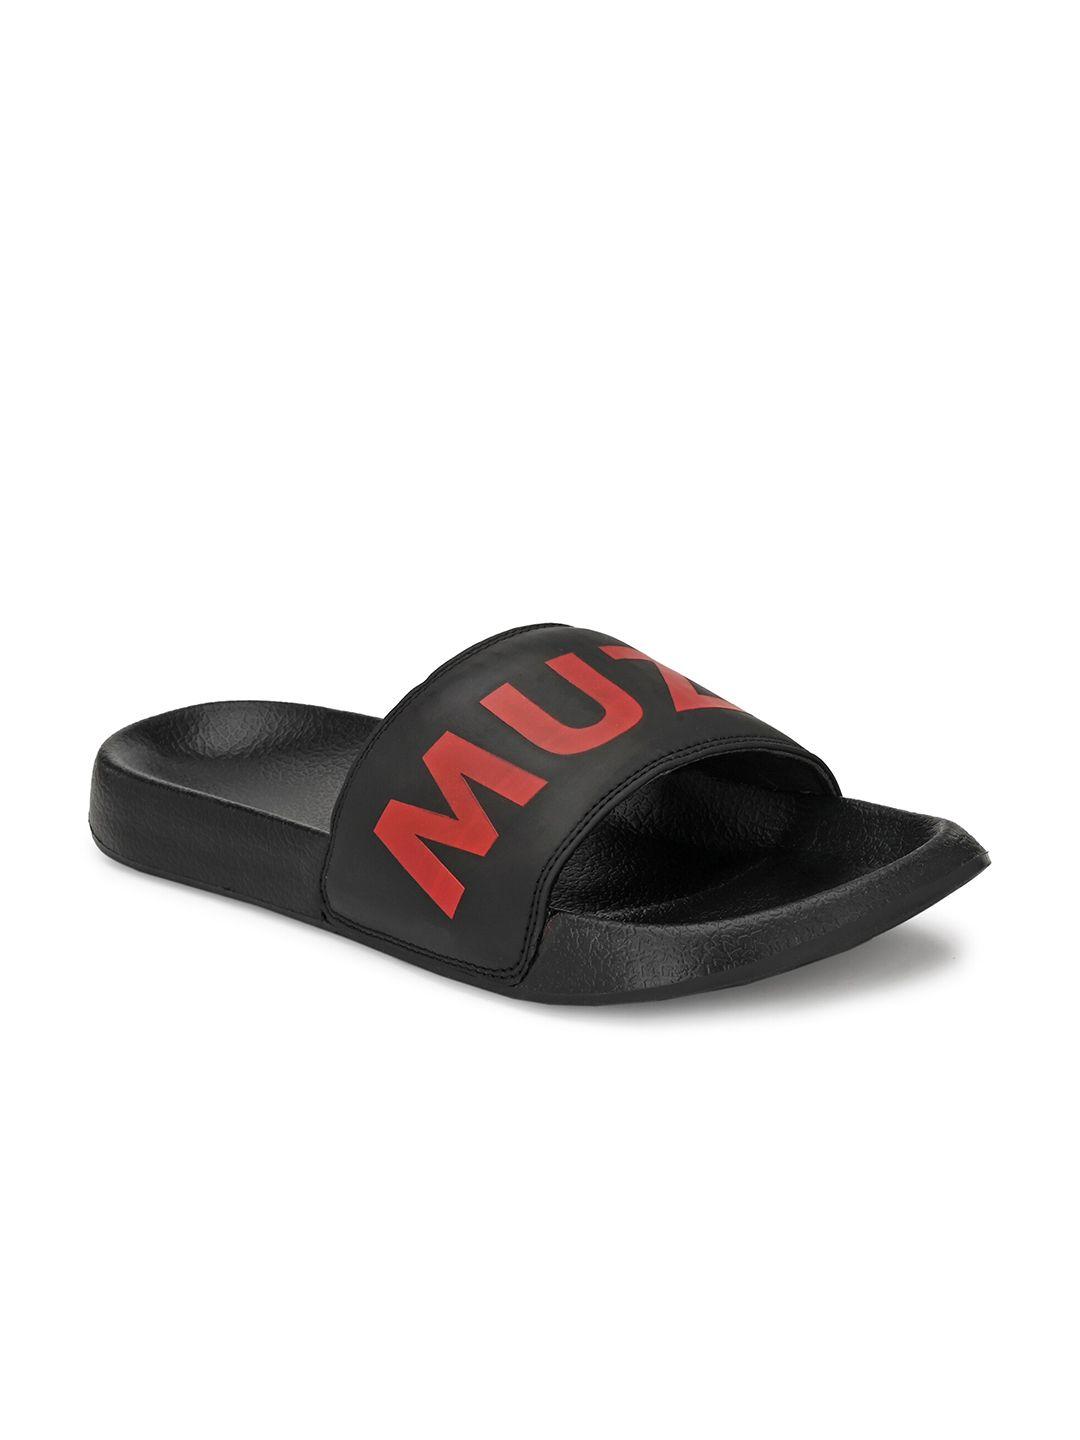 muzzati-men-maroon-&-black-printed-sliders